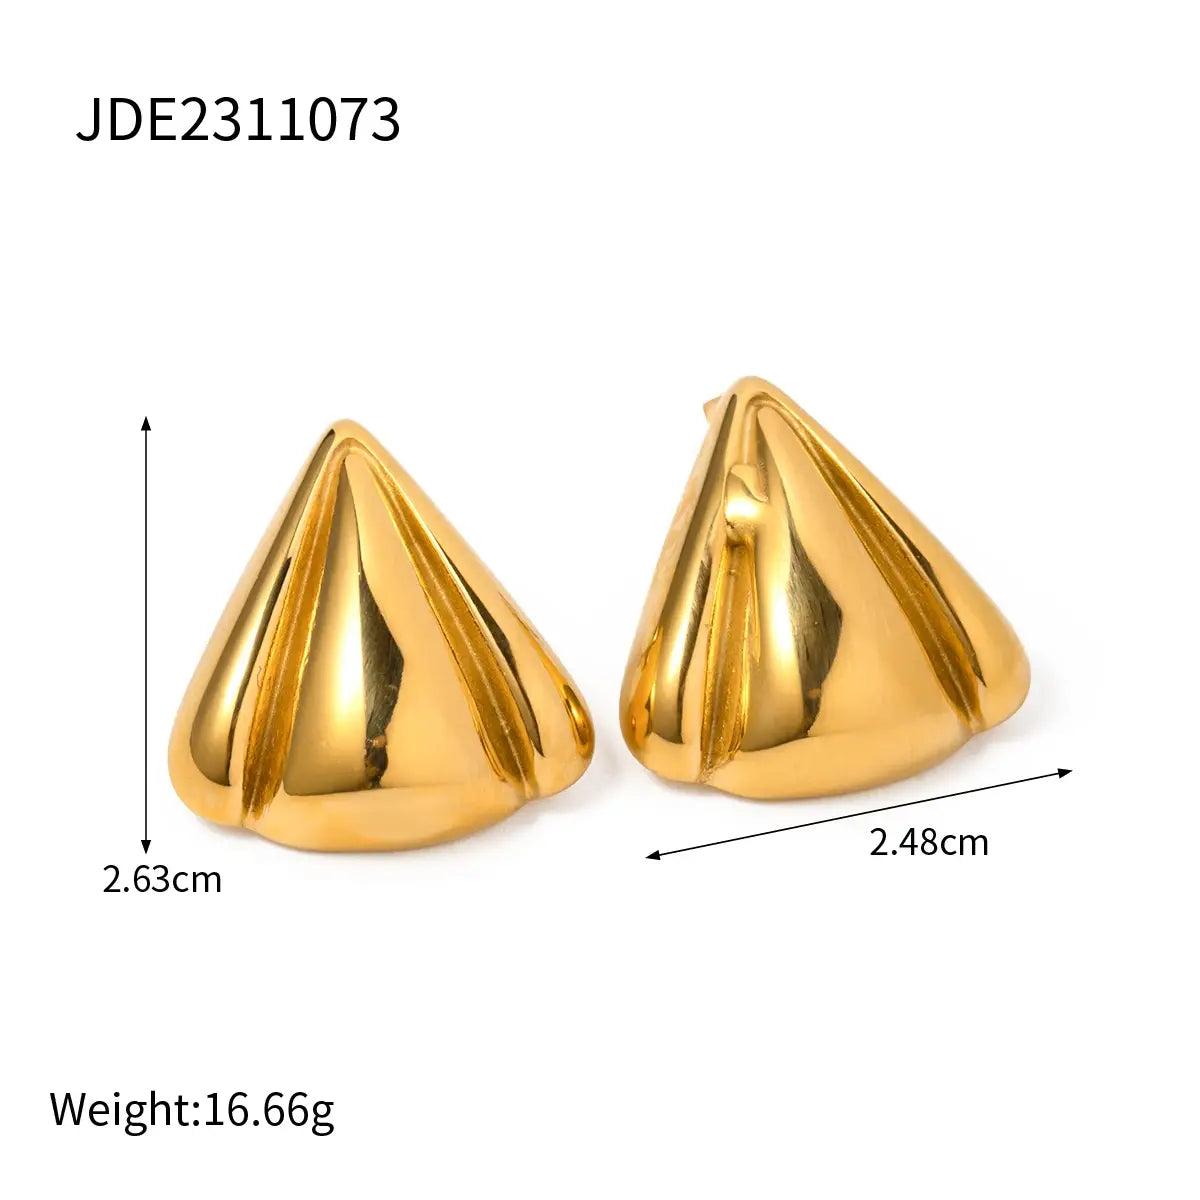 Uworld Minimalist Geometric Triangle Stainless Steel Earrings